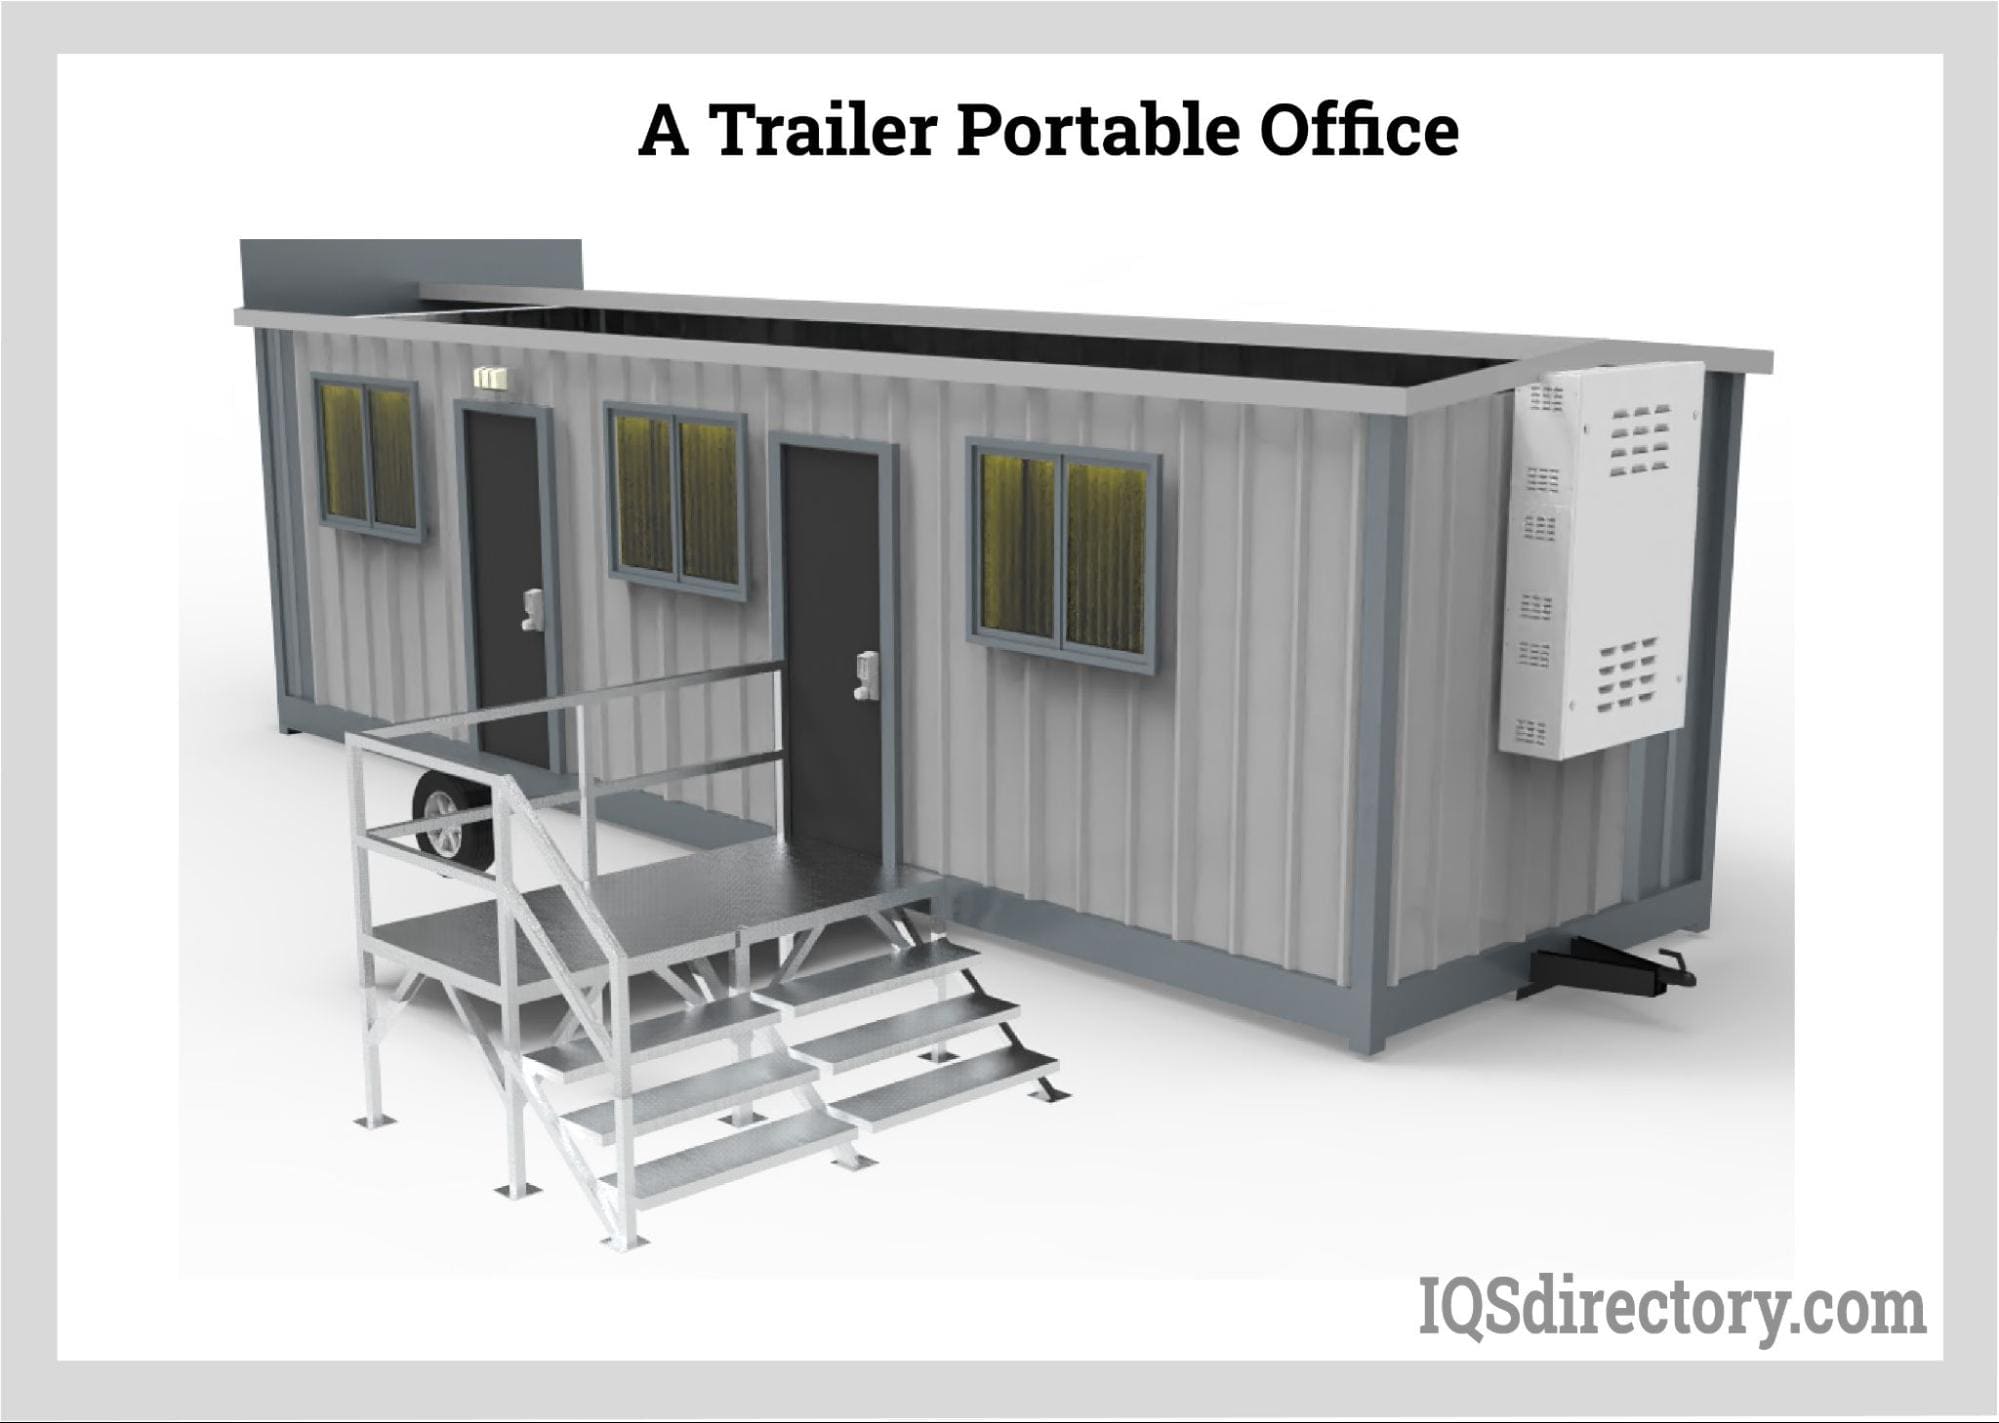 A Trailer Portable Office